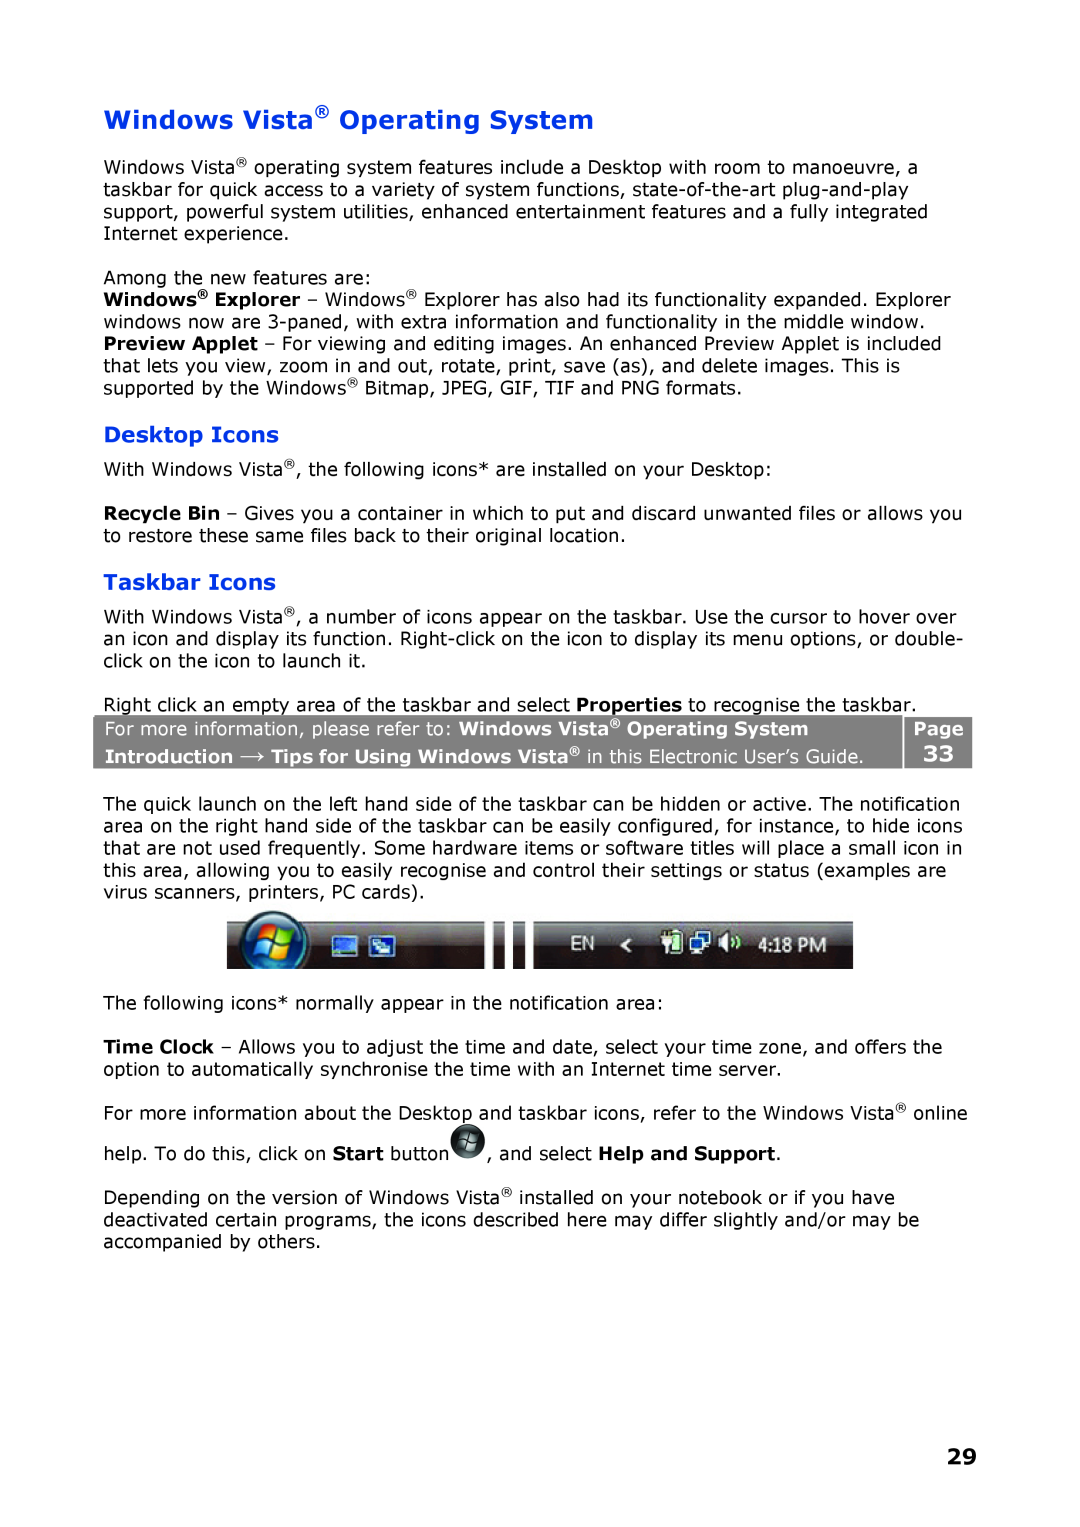 NEC P8510 manual Windows Vista Operating System, Desktop Icons, Taskbar Icons, Page 